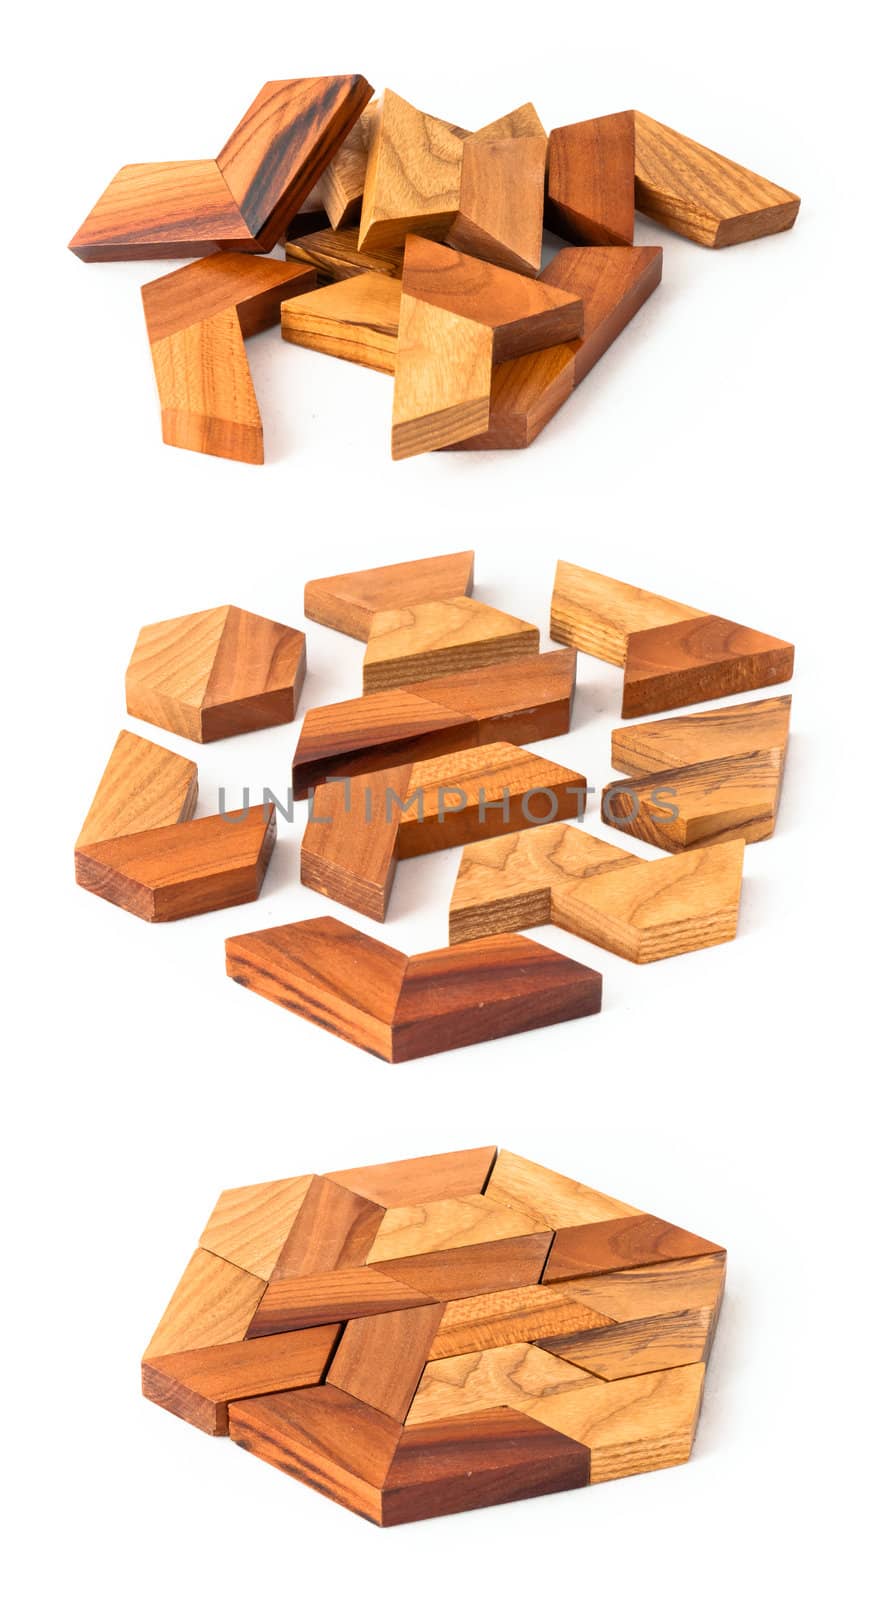 Wooden hexahedron puzzle by dmitryelagin